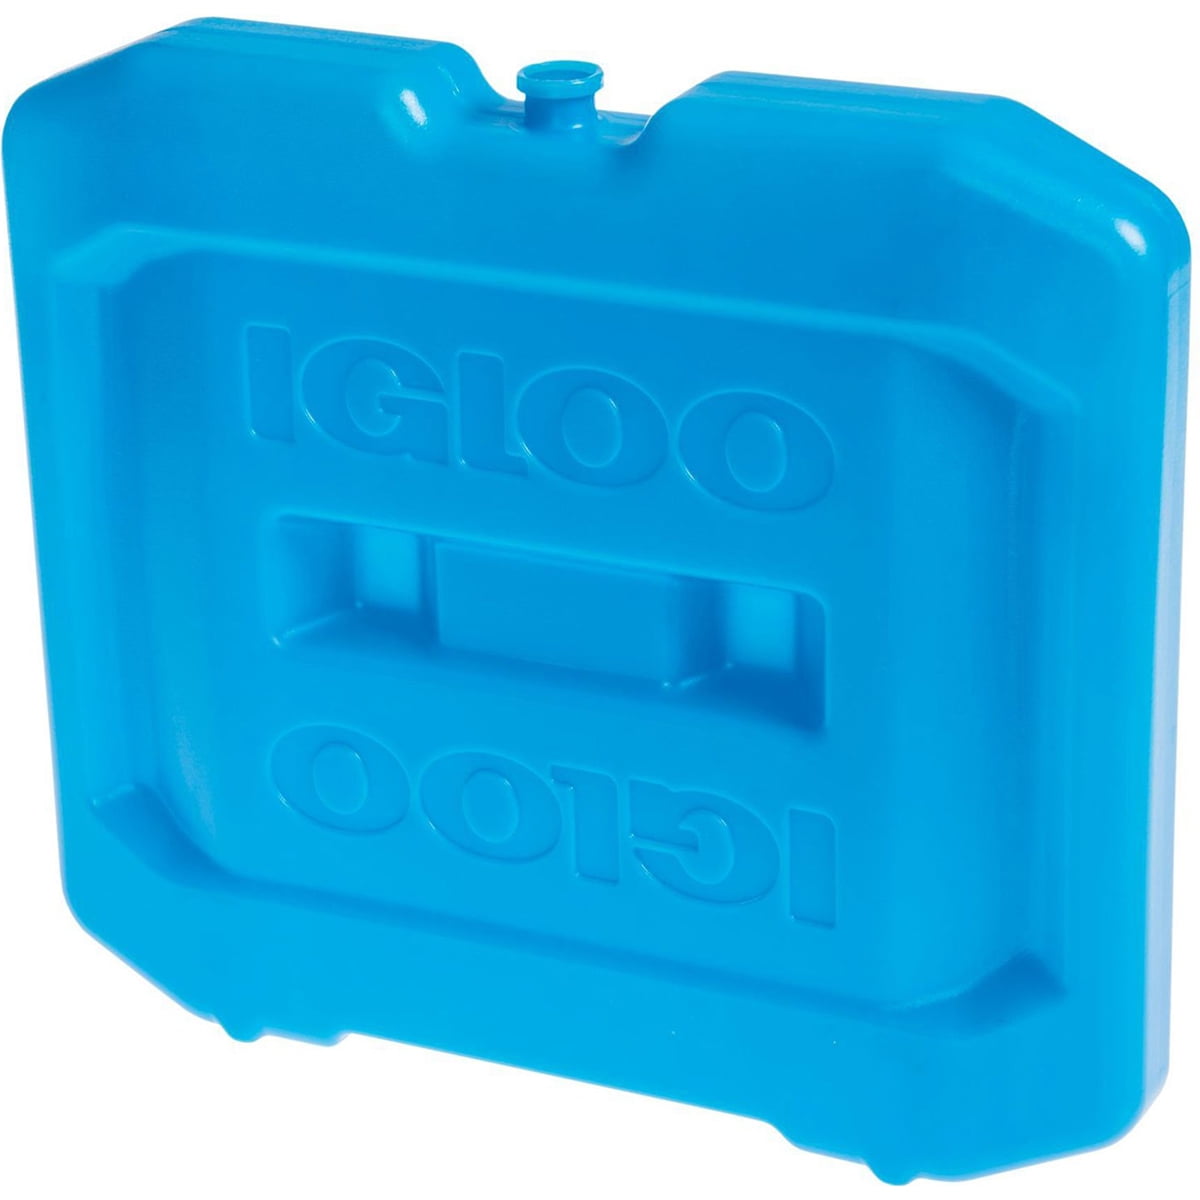 Igloo Maxcold Ice Gel Pack - 8 oz bag